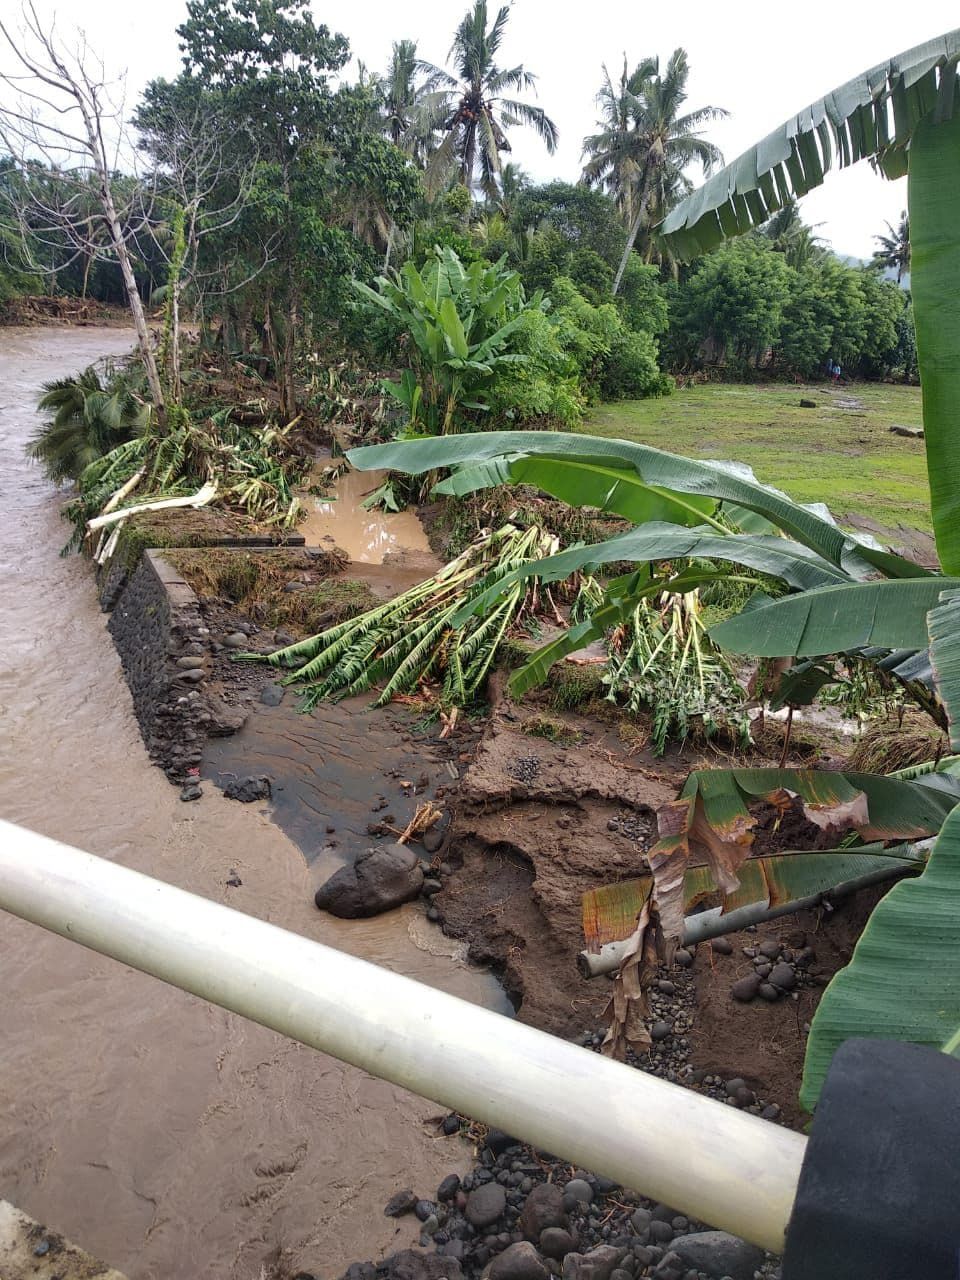 Banjir bandang menerjang Desq Pulukan, Kecamatan Pekutatan, Jembrana, Jumat 15 Januari 2021 dini hari.  Beruntung tak ada korban jiwa dalam bencana ini.